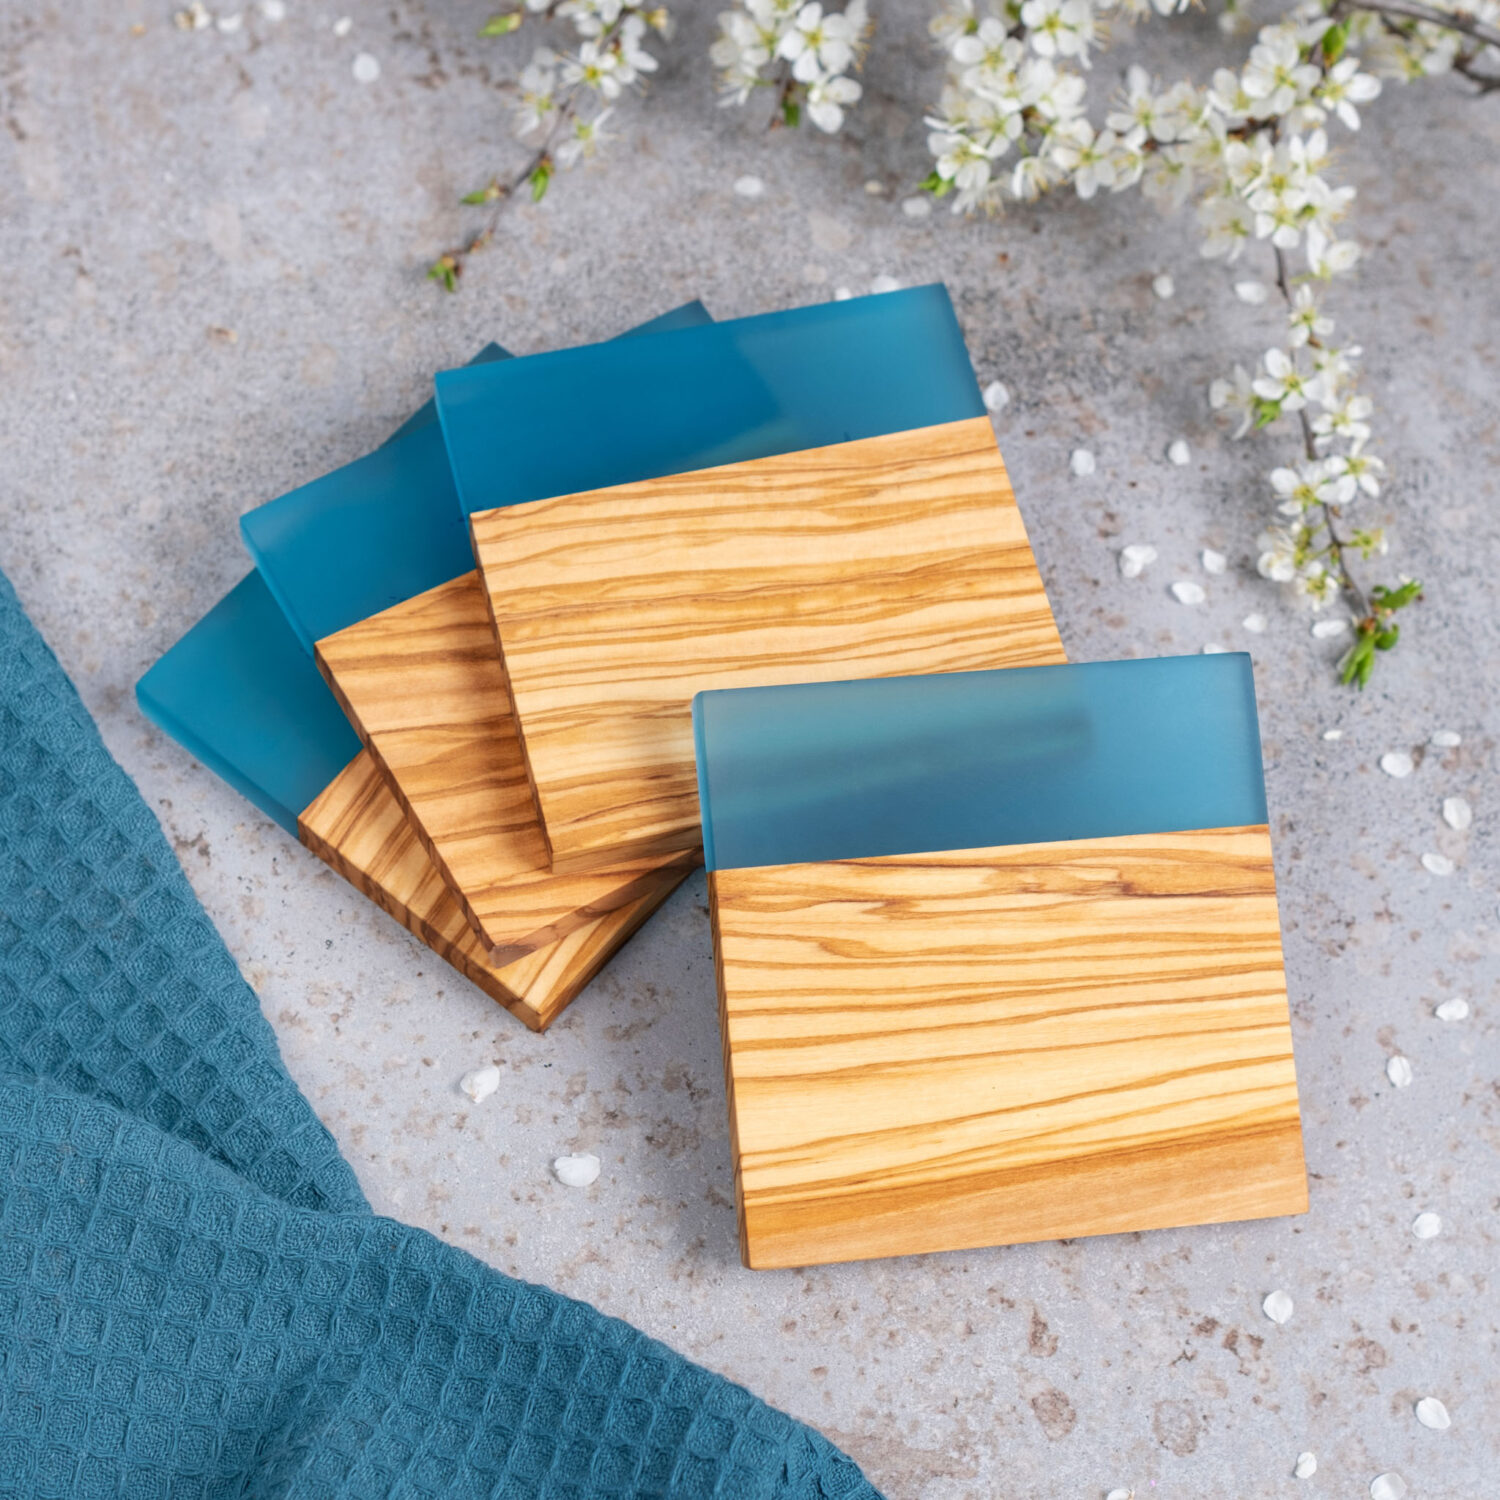 Olive Wood Resin Coasters - Set of 4